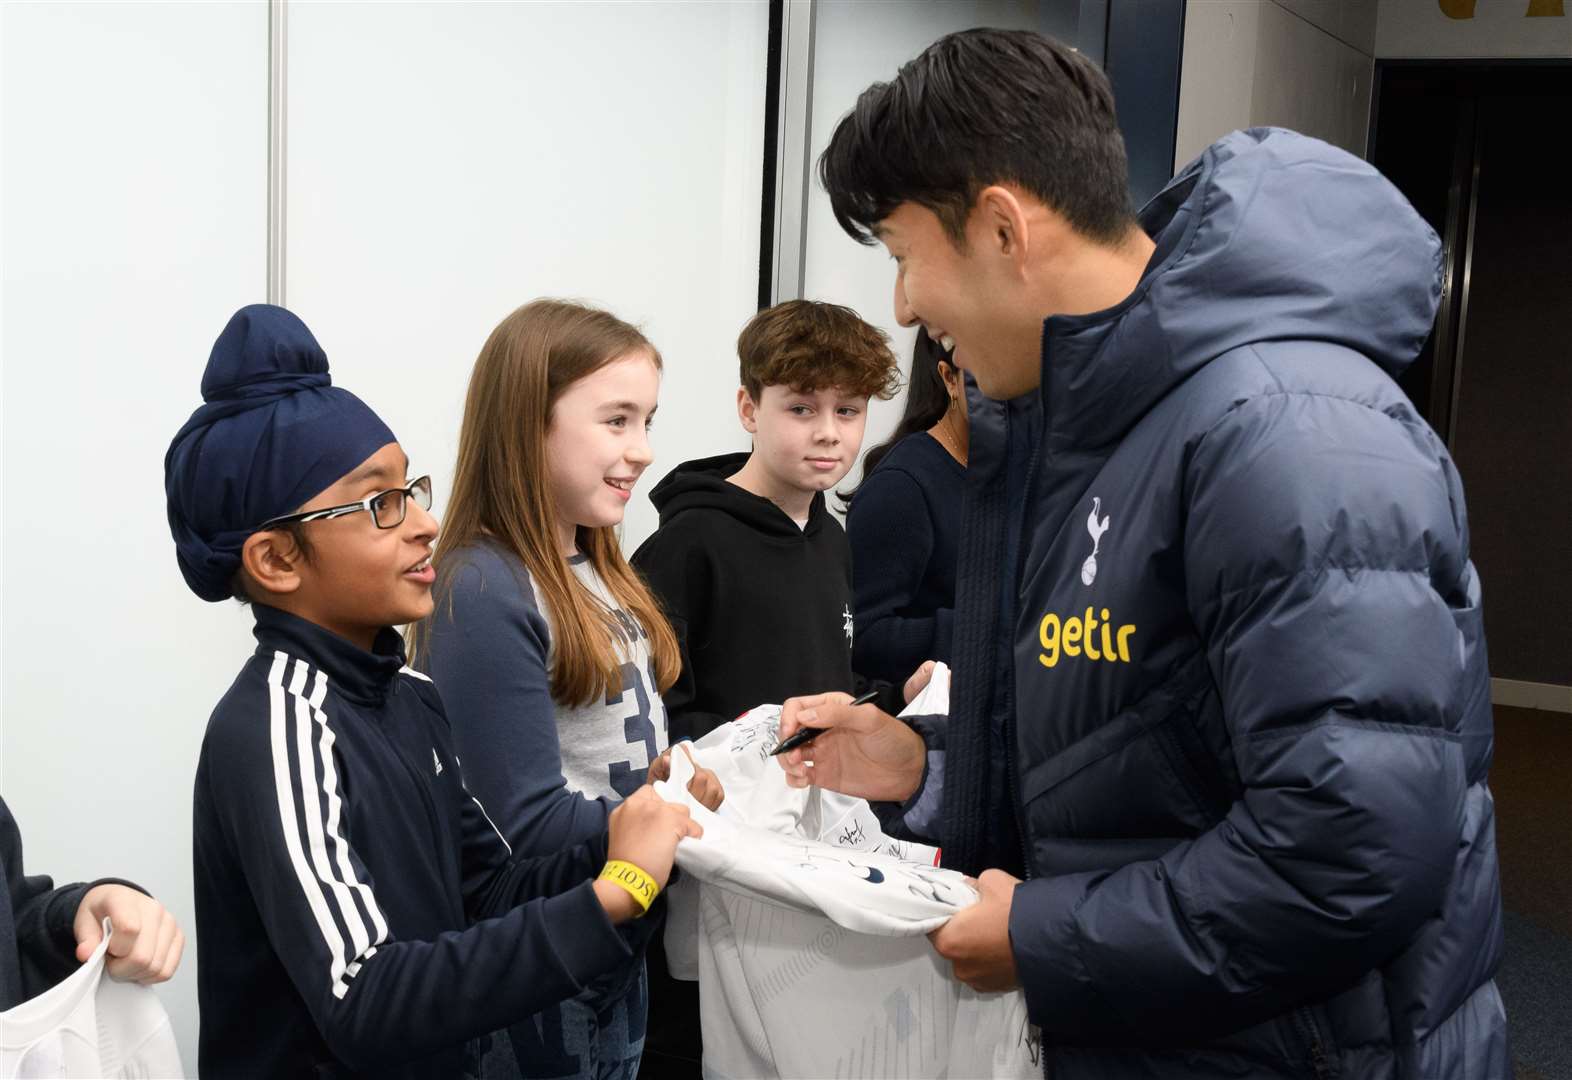 The Spurs fan got to meet his idols